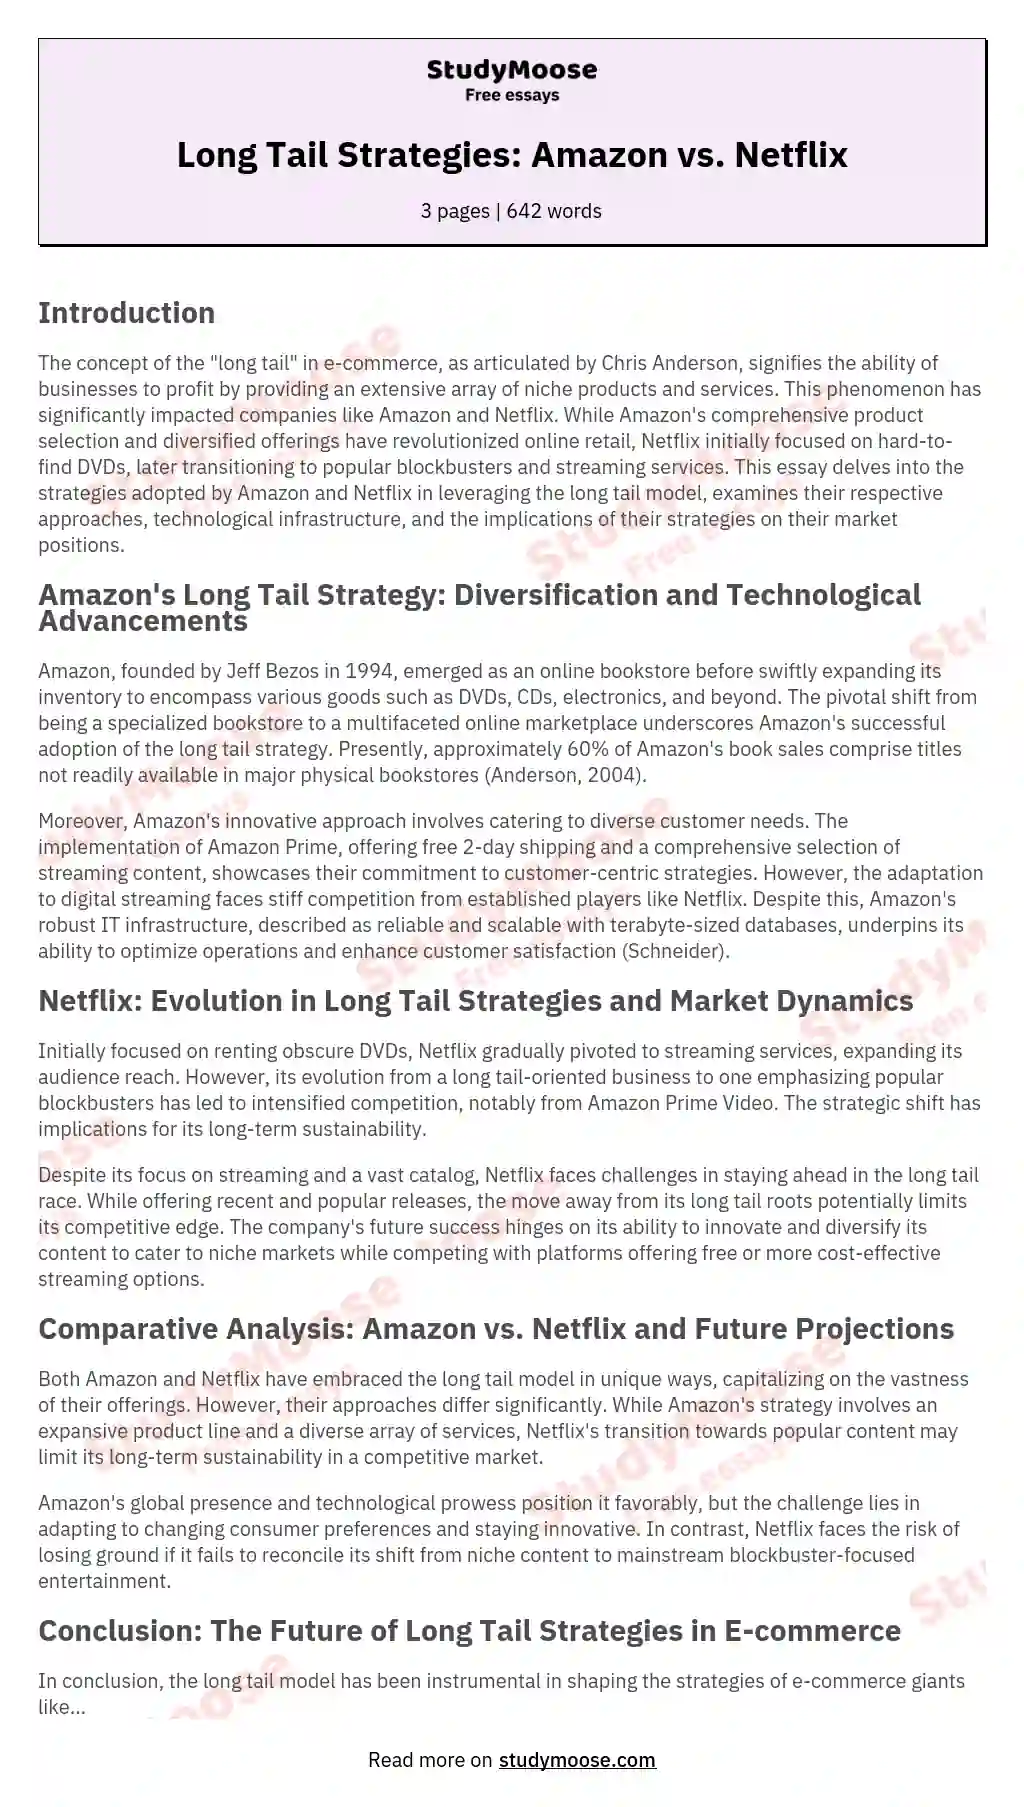 Long Tail Strategies: Amazon vs. Netflix essay